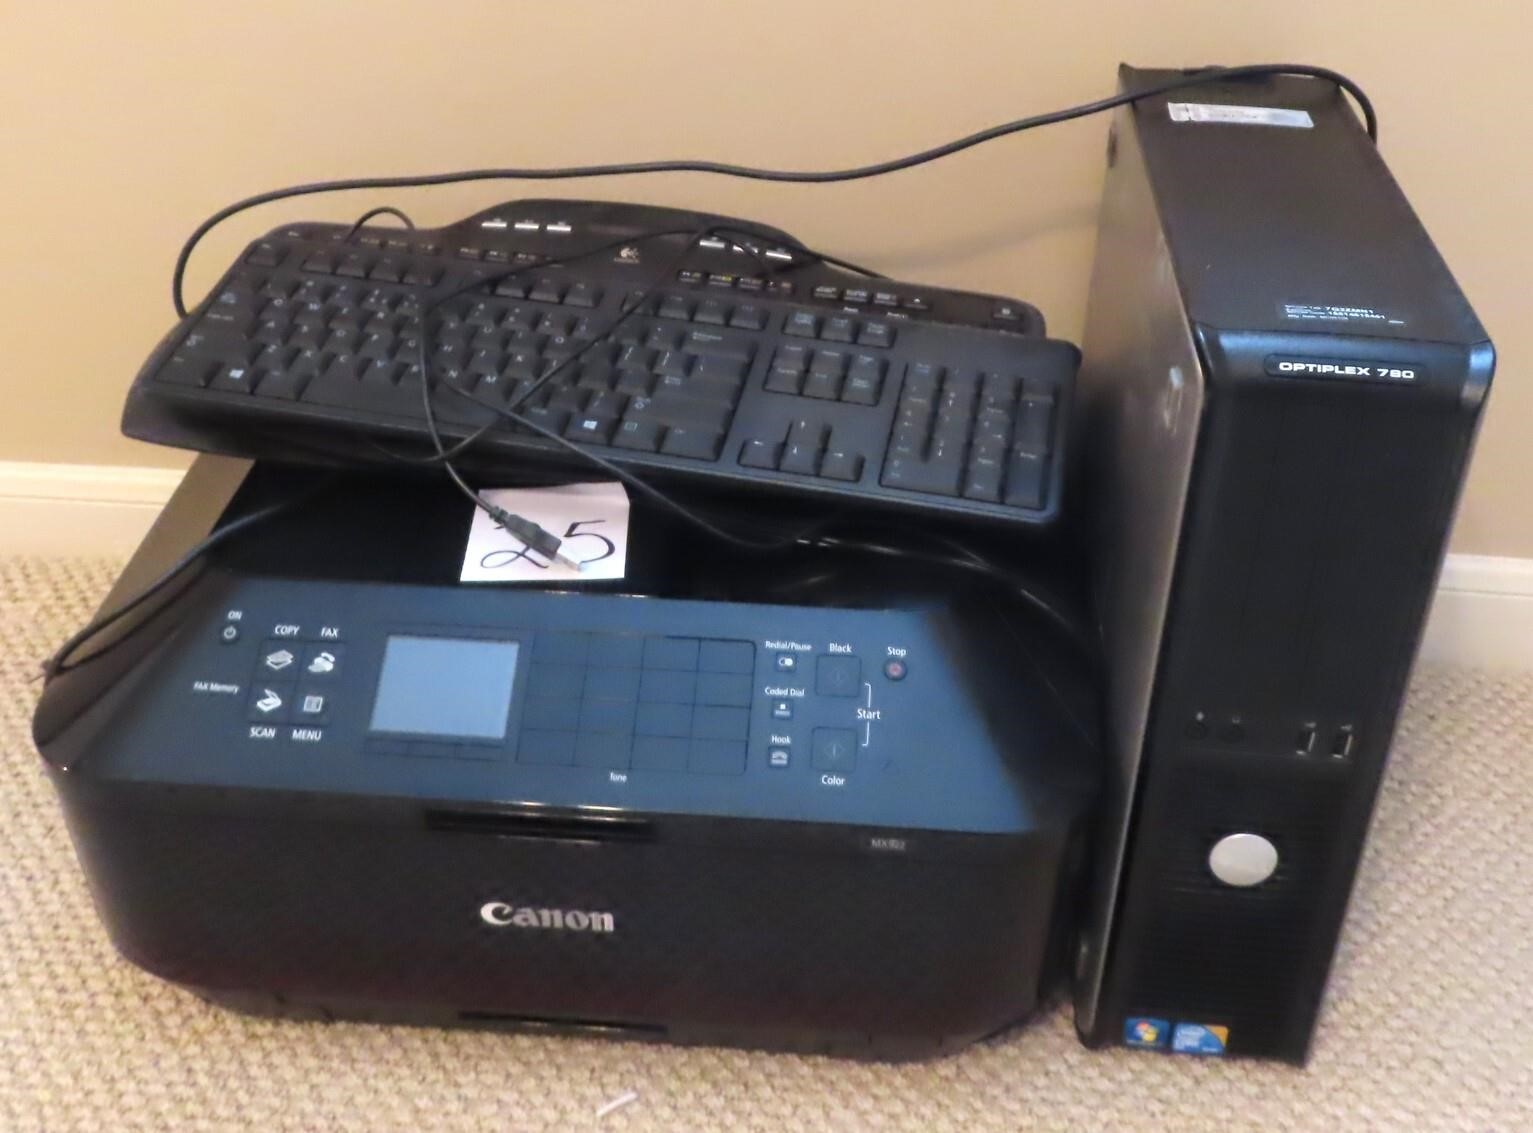 Dell Optifplex Computer, Cannon Printer, Keyboards